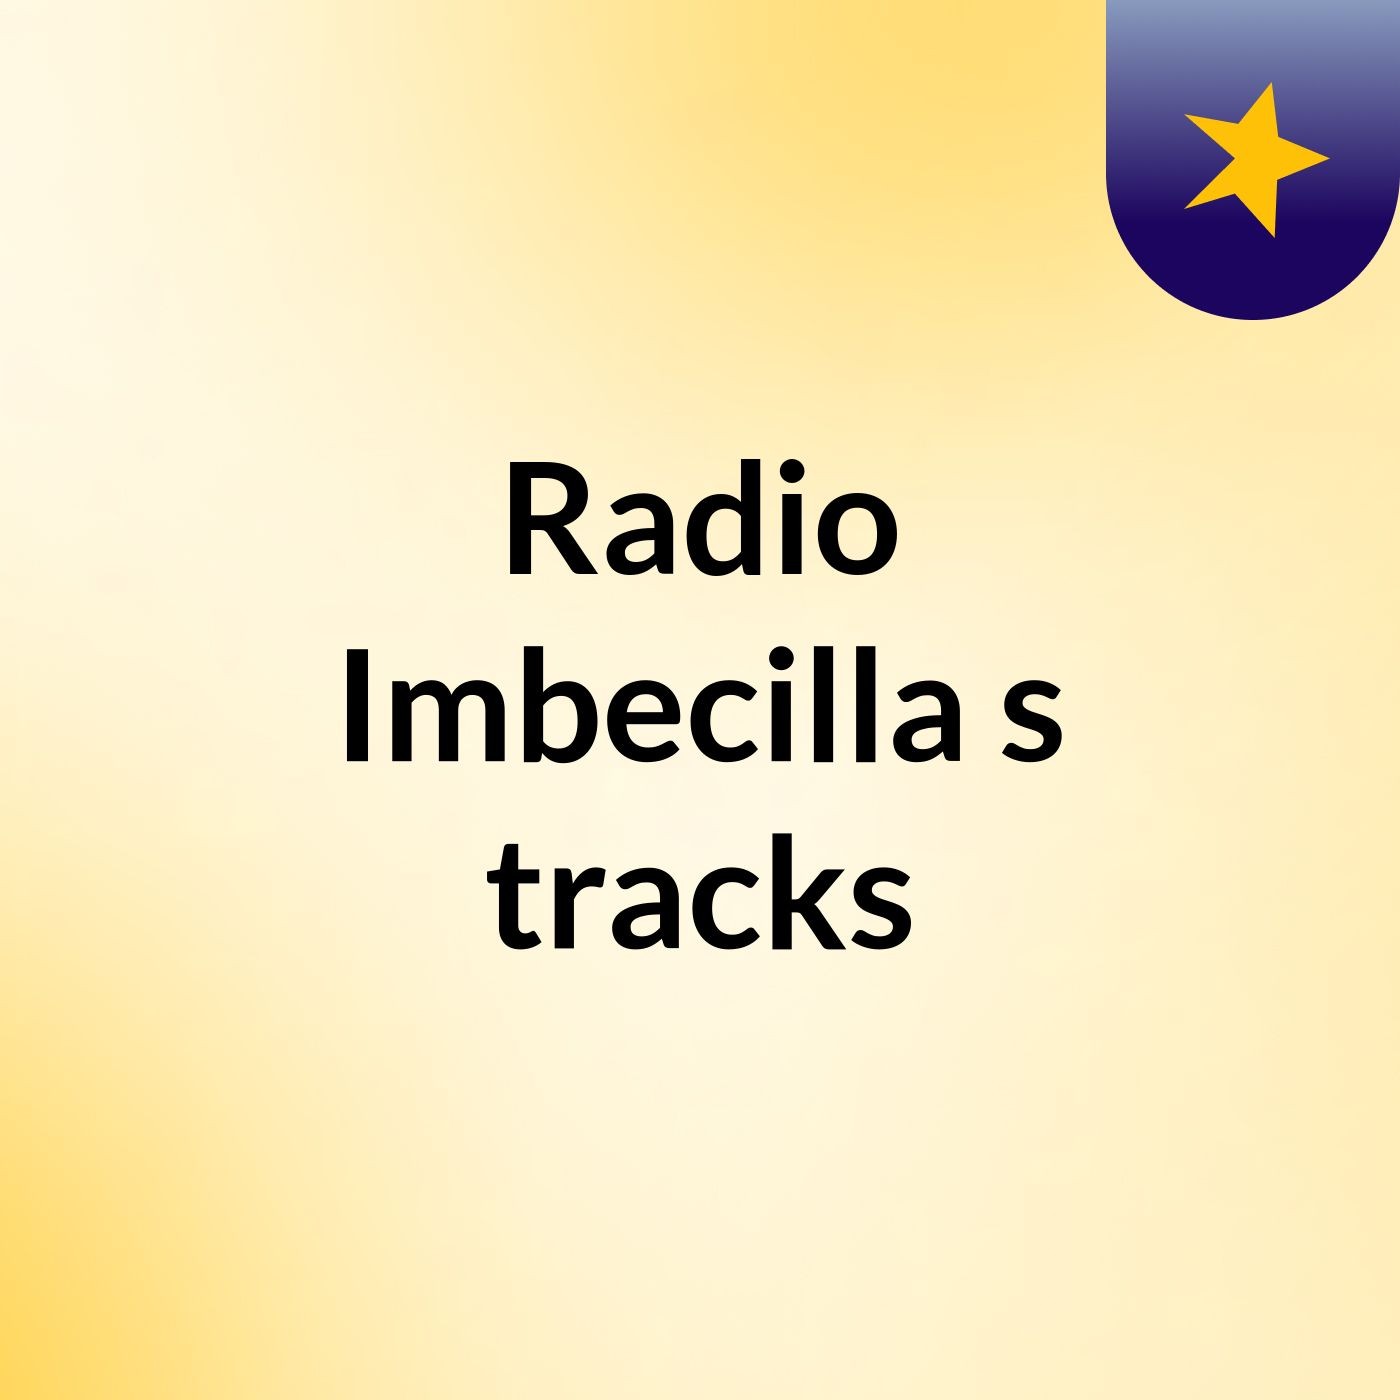 Radio Imbecilla's tracks